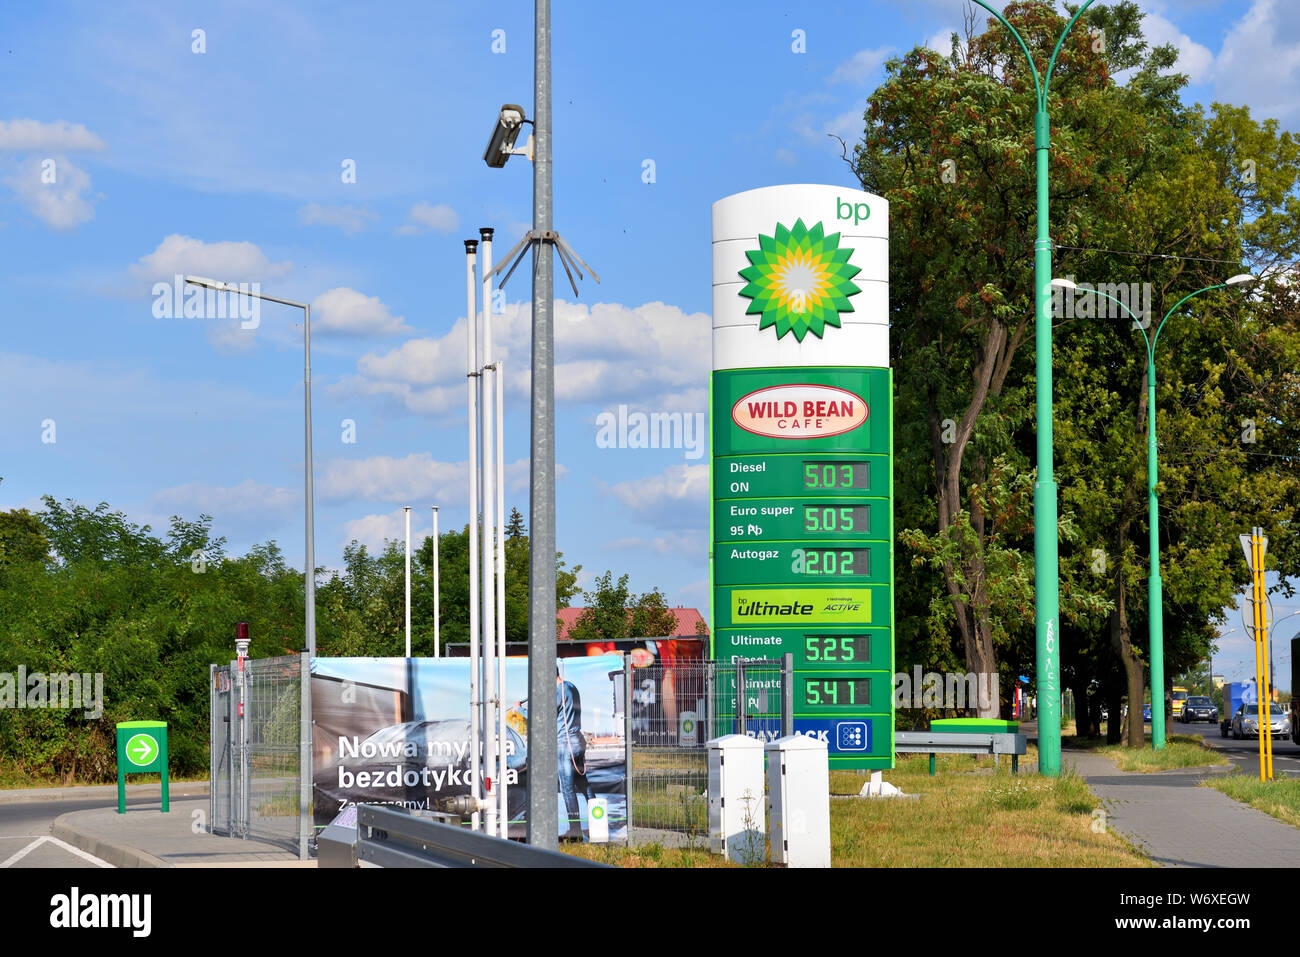 BEDZIN, Polonia - 15 Luglio 2019: BP gas station in Bedzin Foto Stock